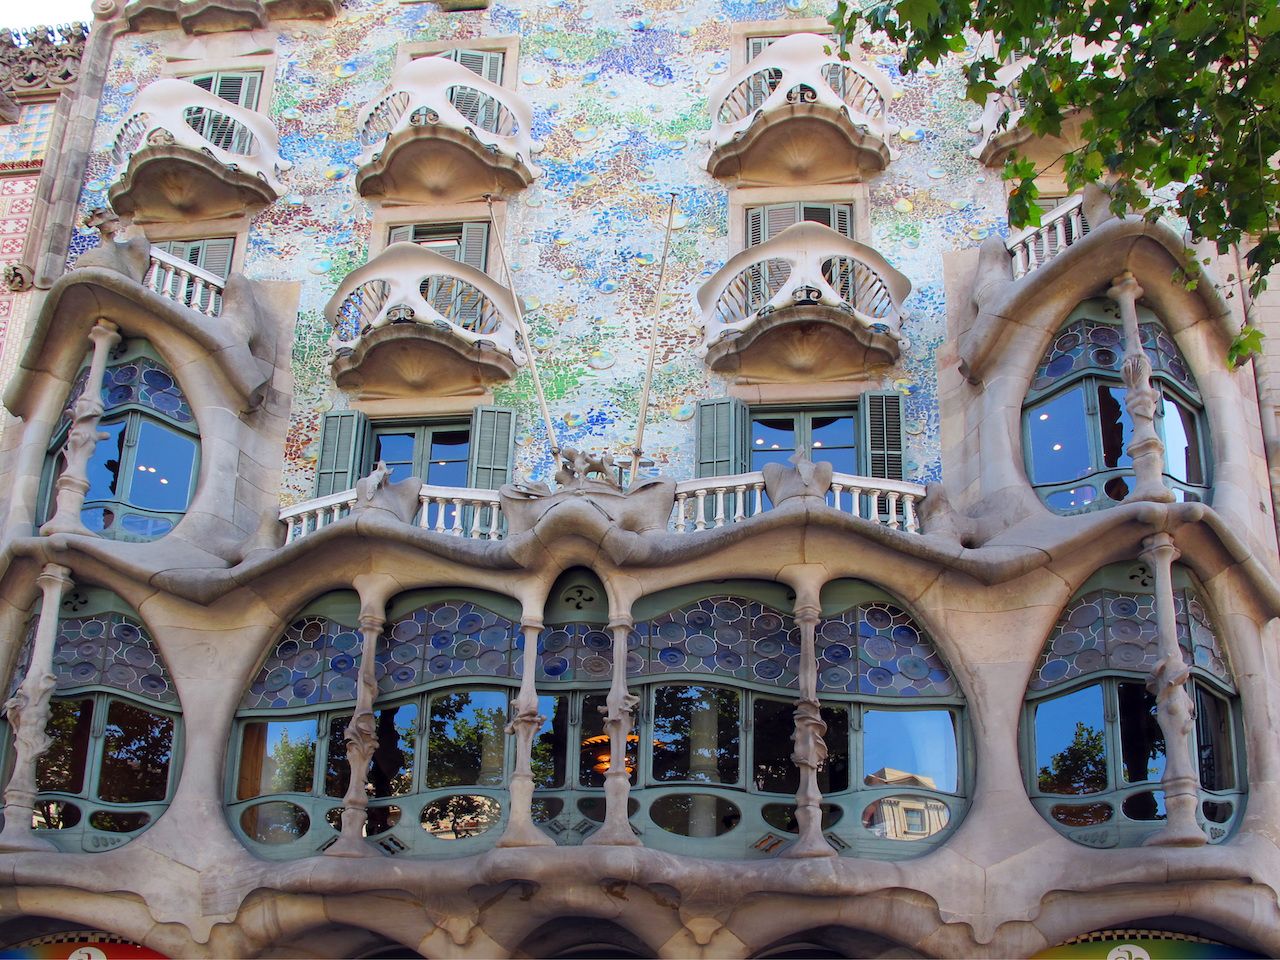 Casa Batllo in Barcelona Spain